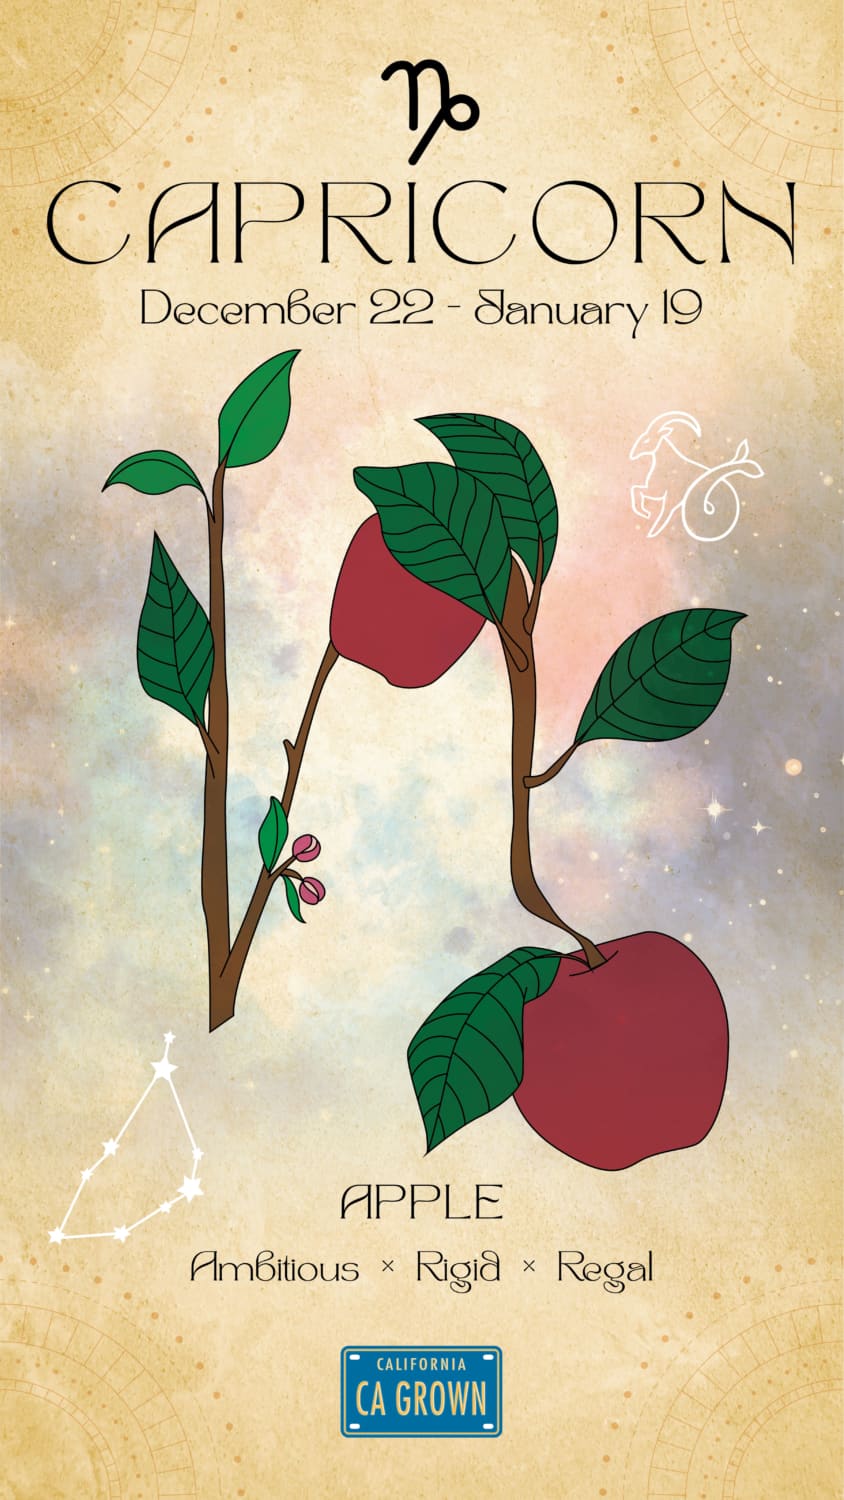 Capricorn crop Zodiac with apples